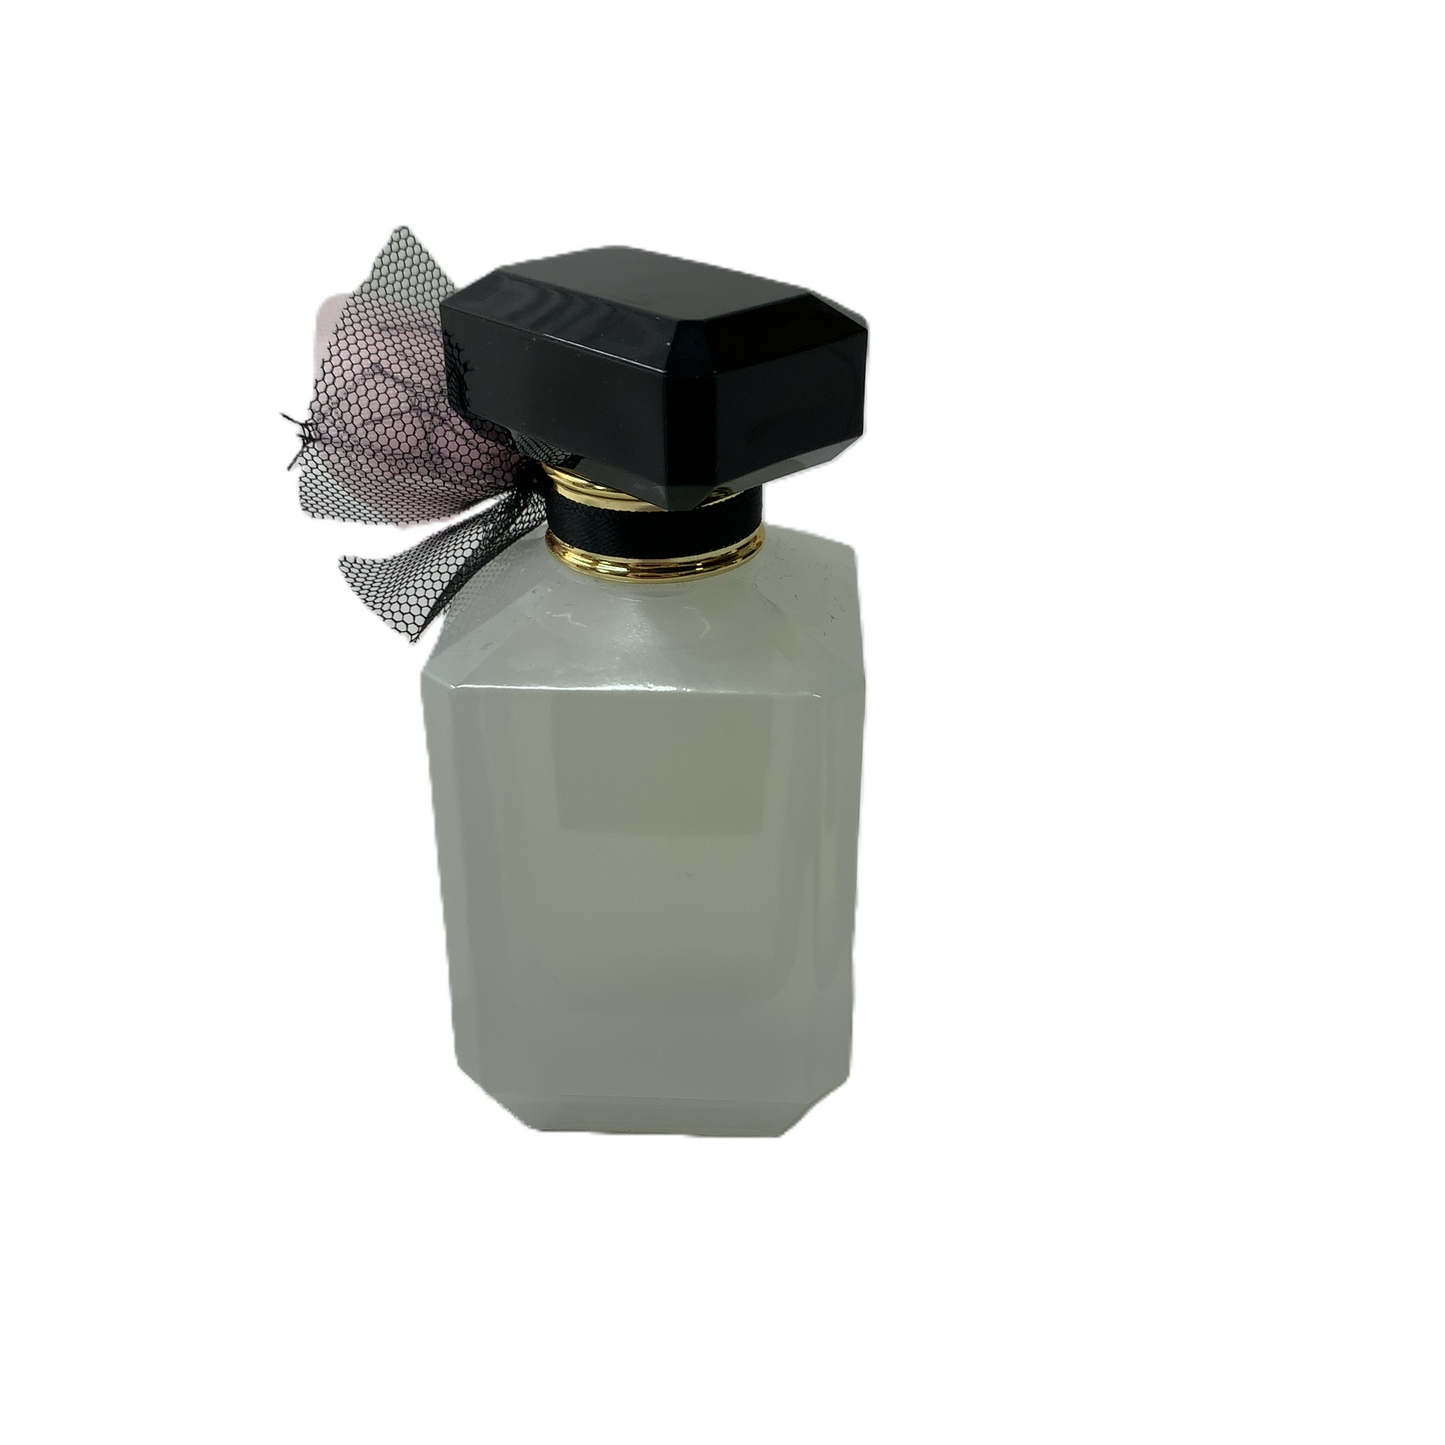 Fragrance By Victorias Secret